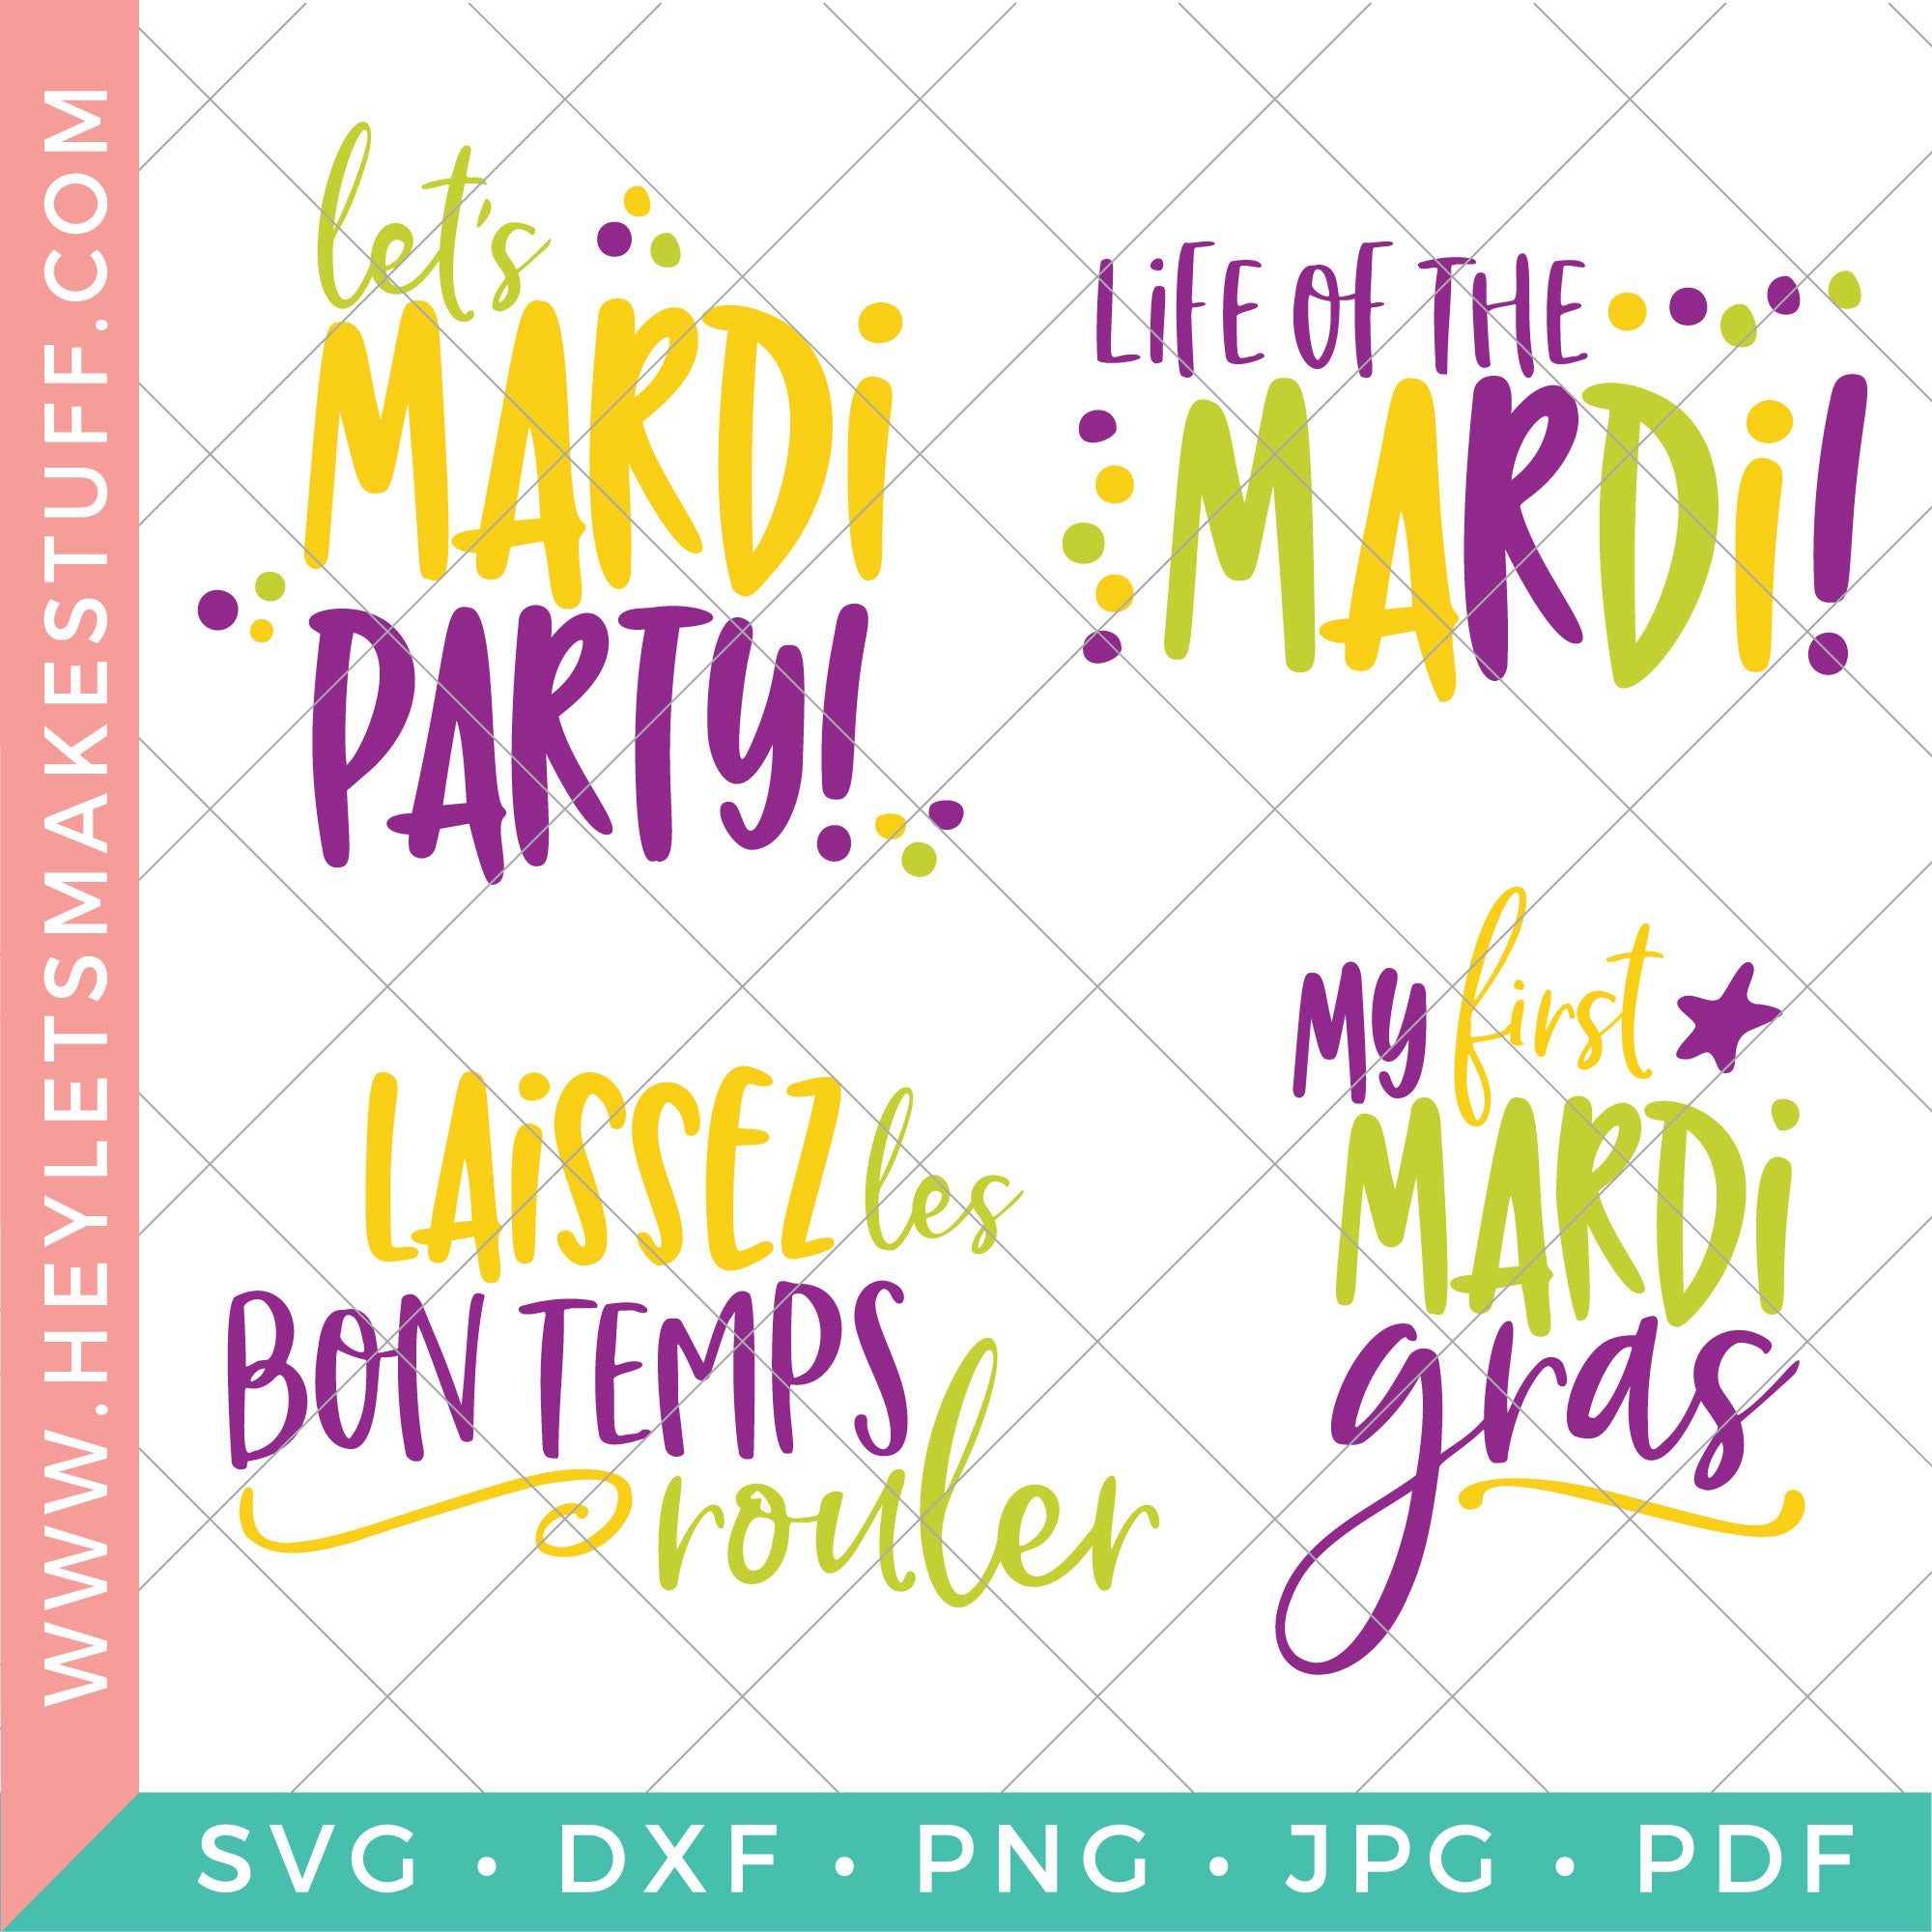 Download Svg Dxf Love Mardi Gras Pdf Mardi Gras Fat Tuesday Printing Printmaking Craft Supplies Tools